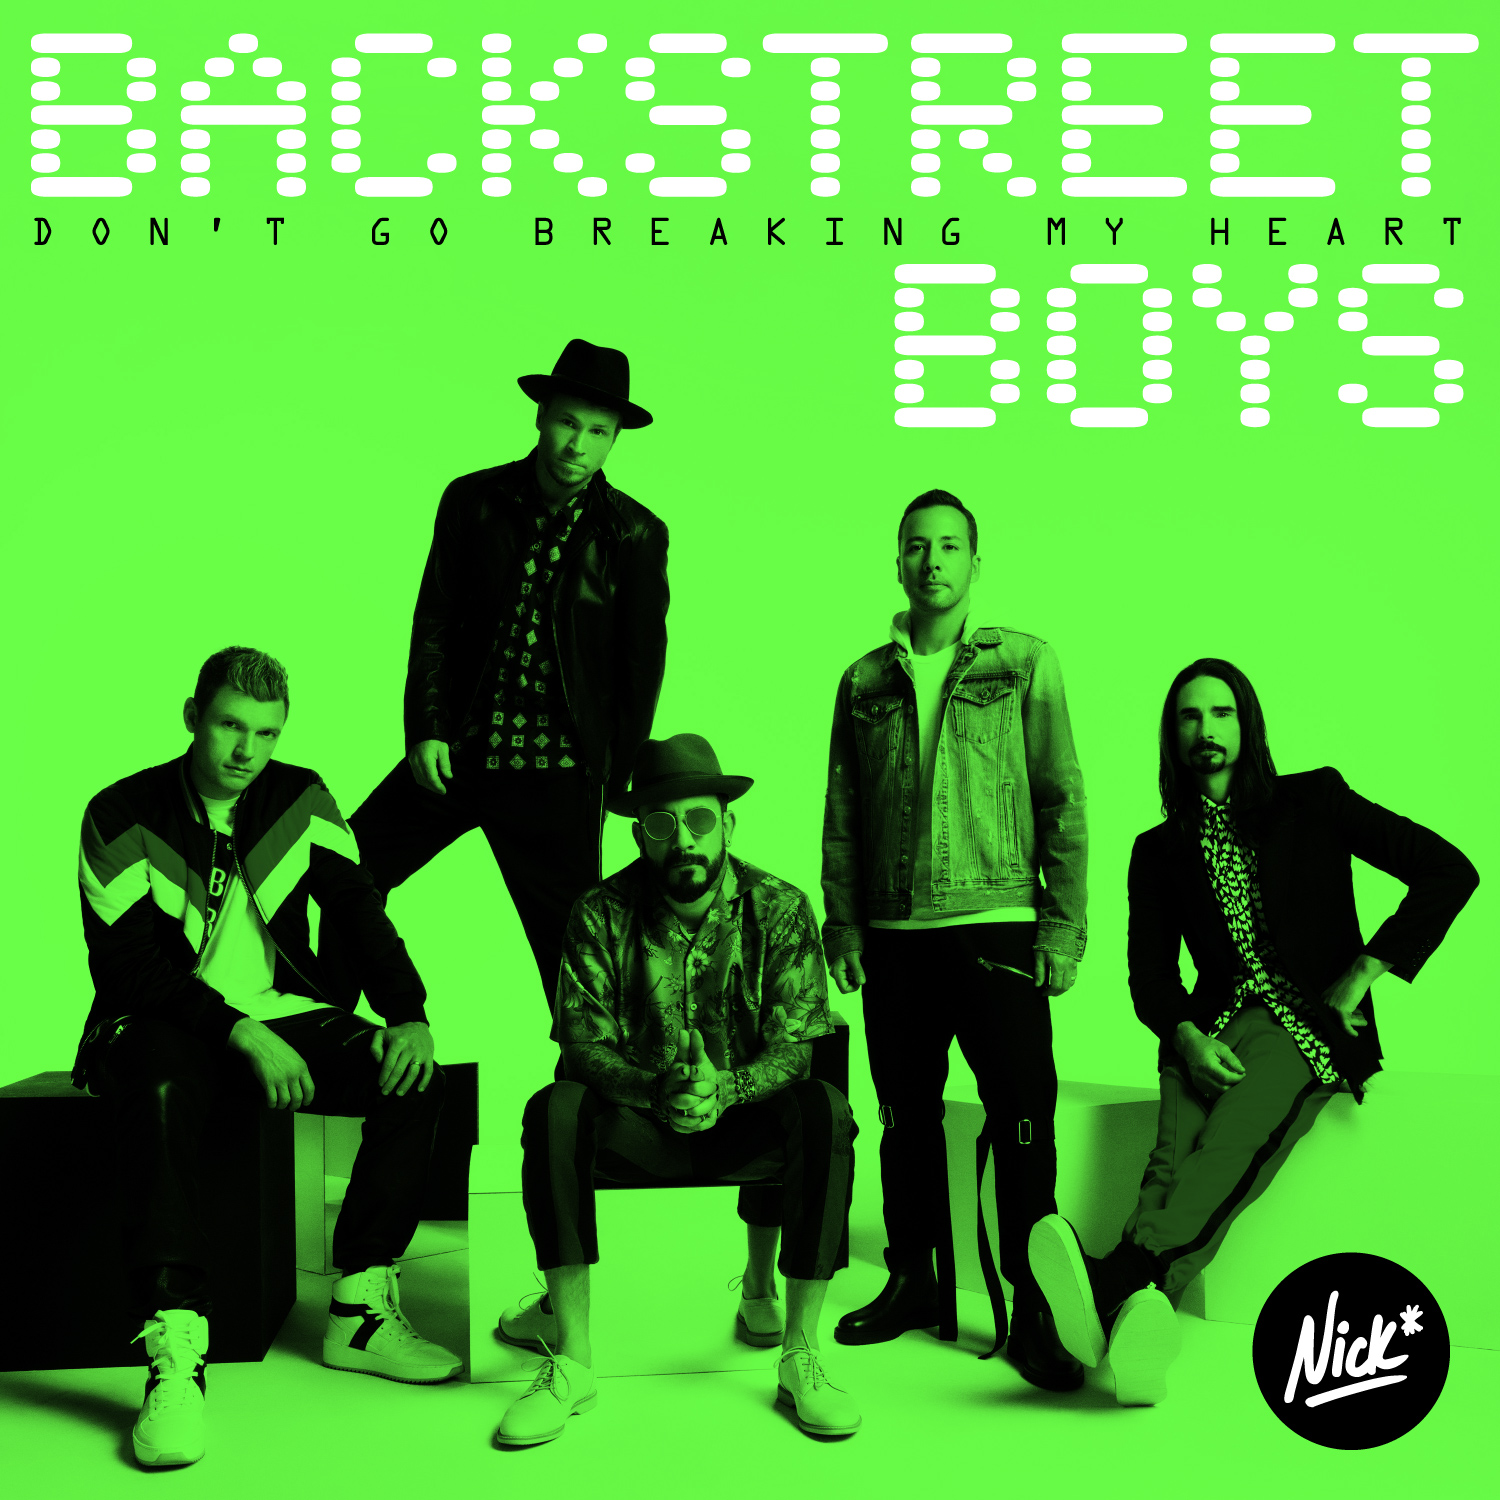 Backstreet Boys - Don't Go Breaking My Heart Nick* Remix